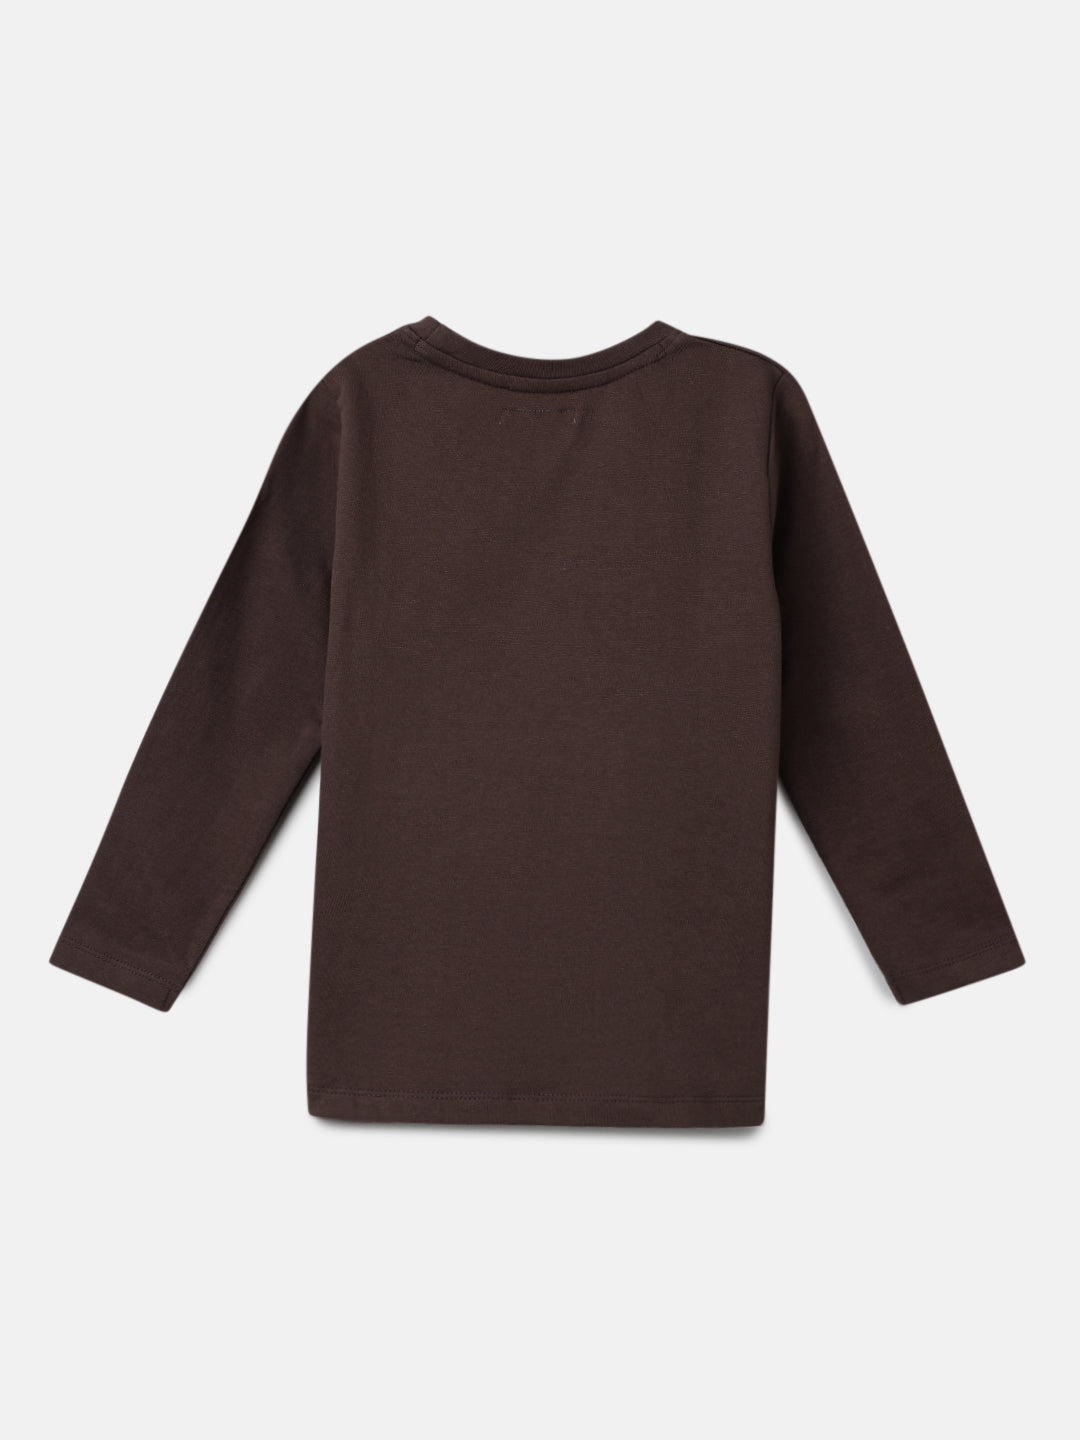 Boys Cotton Solid Brown Printed Sweatshirt